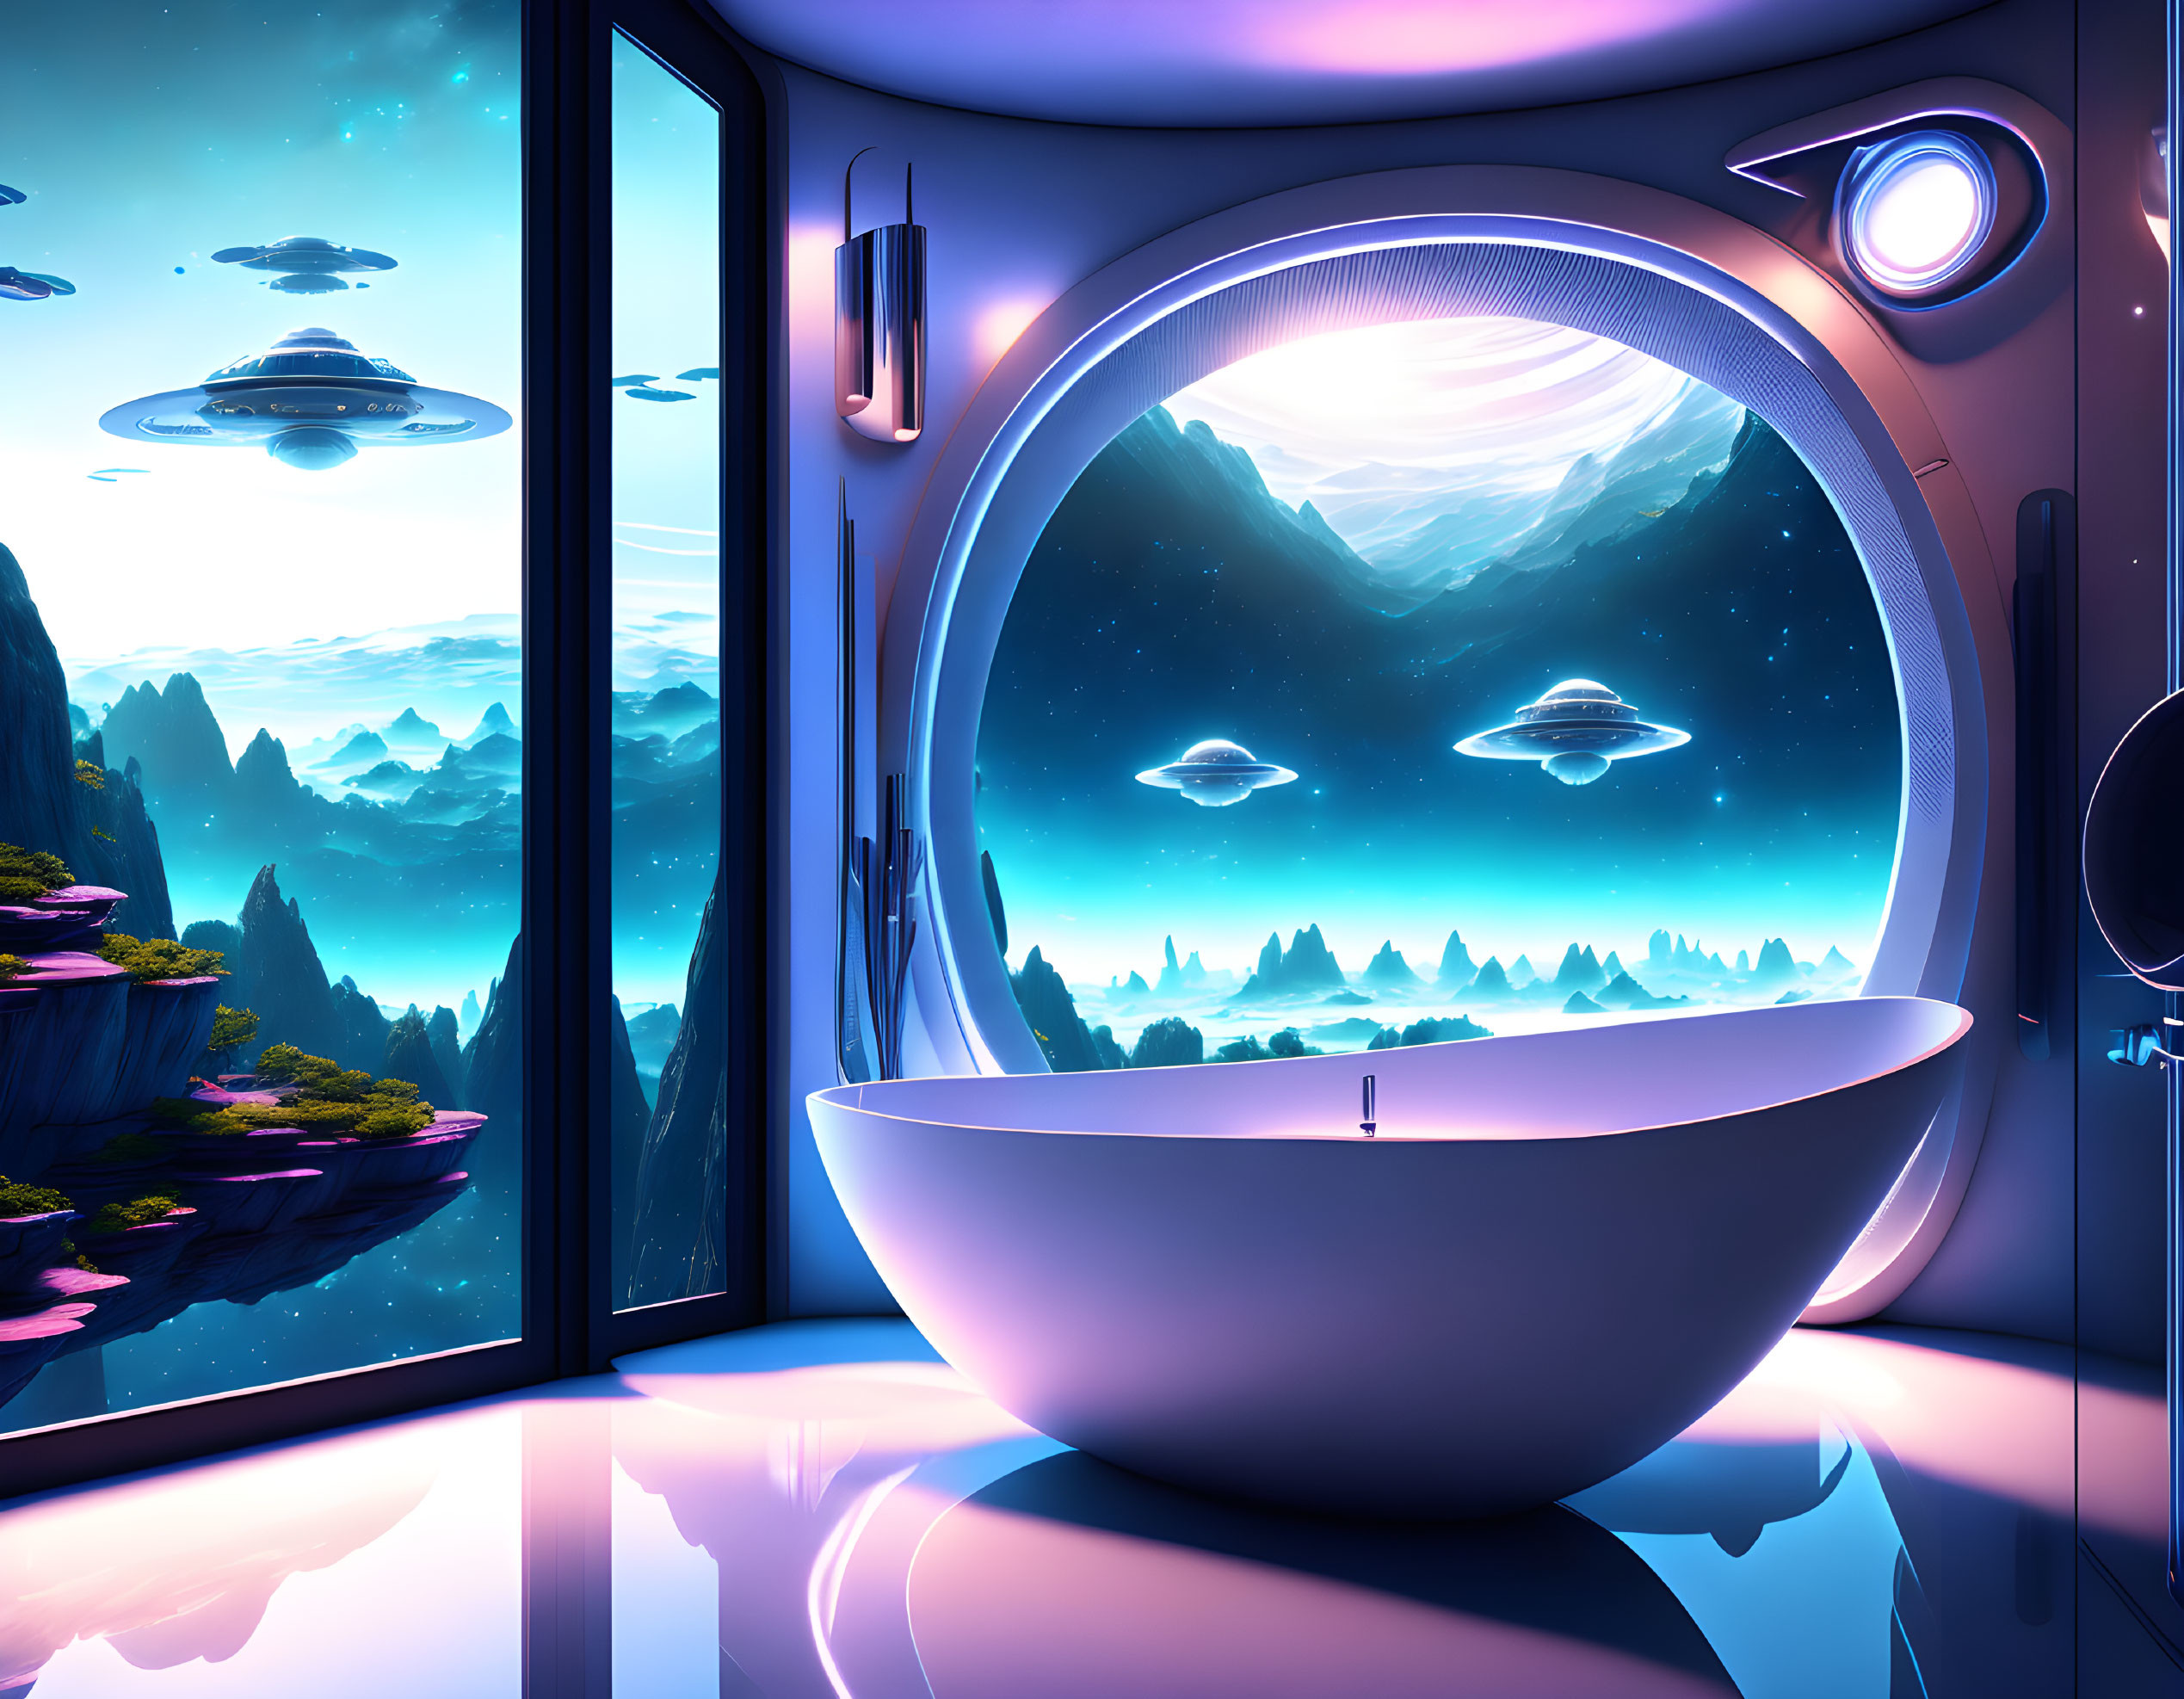 Large Oval Tub in Futuristic Bathroom Overlooking Alien Landscape